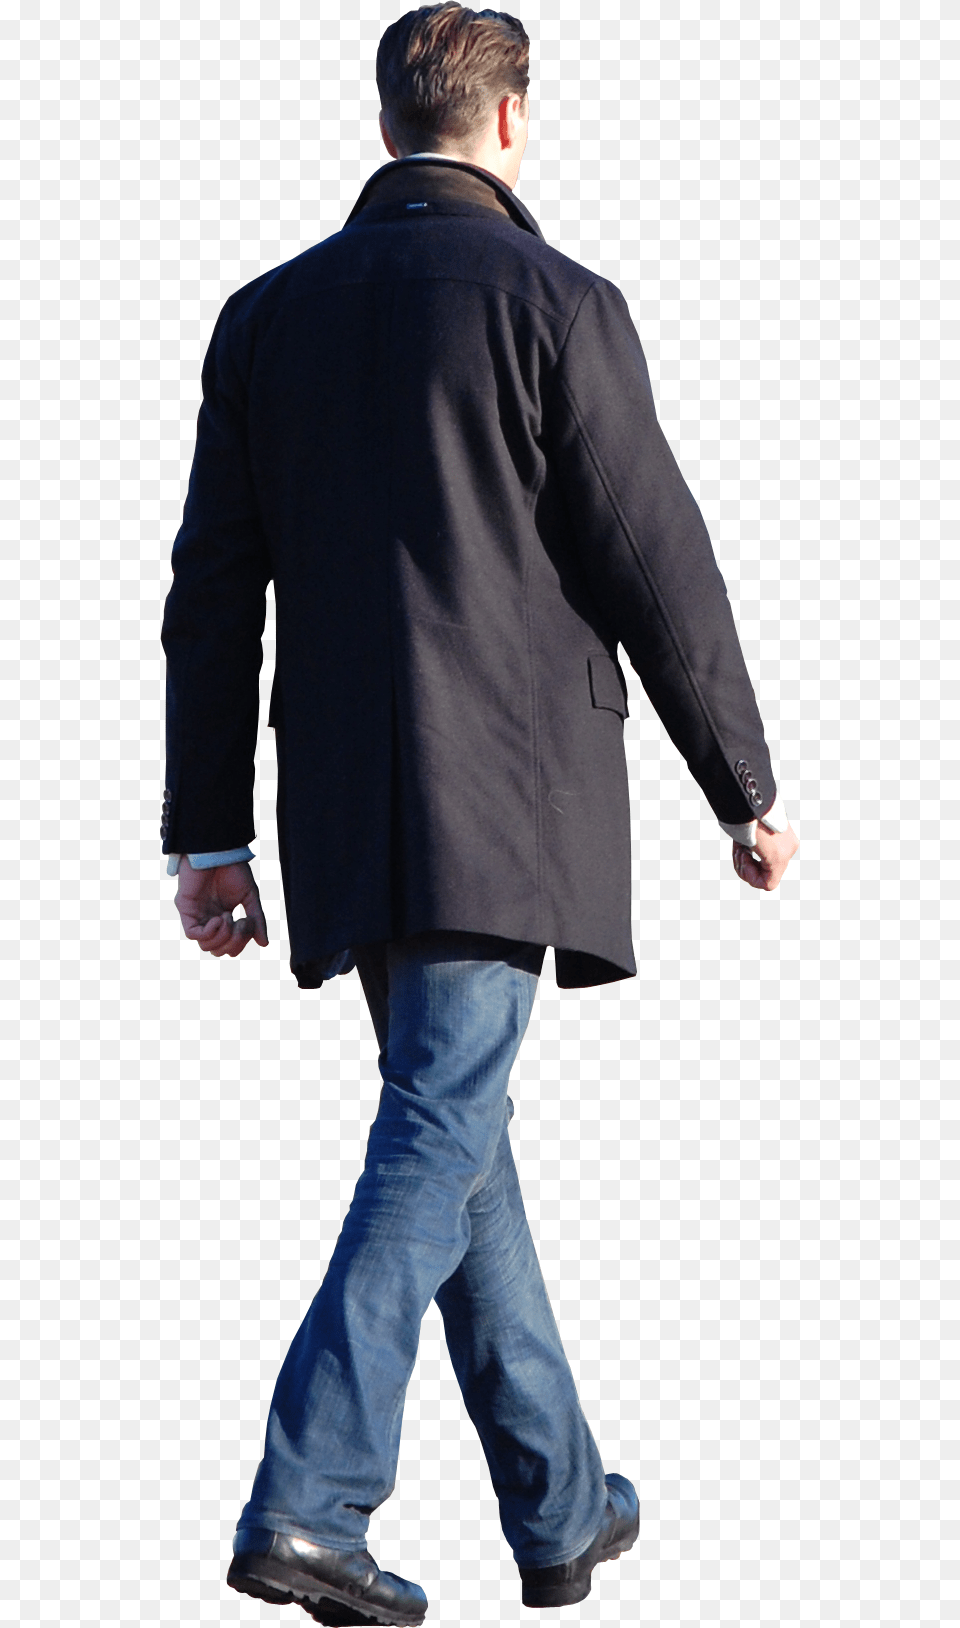 Man Walking Man Walking Behind The Walking Man, Person, Clothing, Coat, Pants Free Png Download